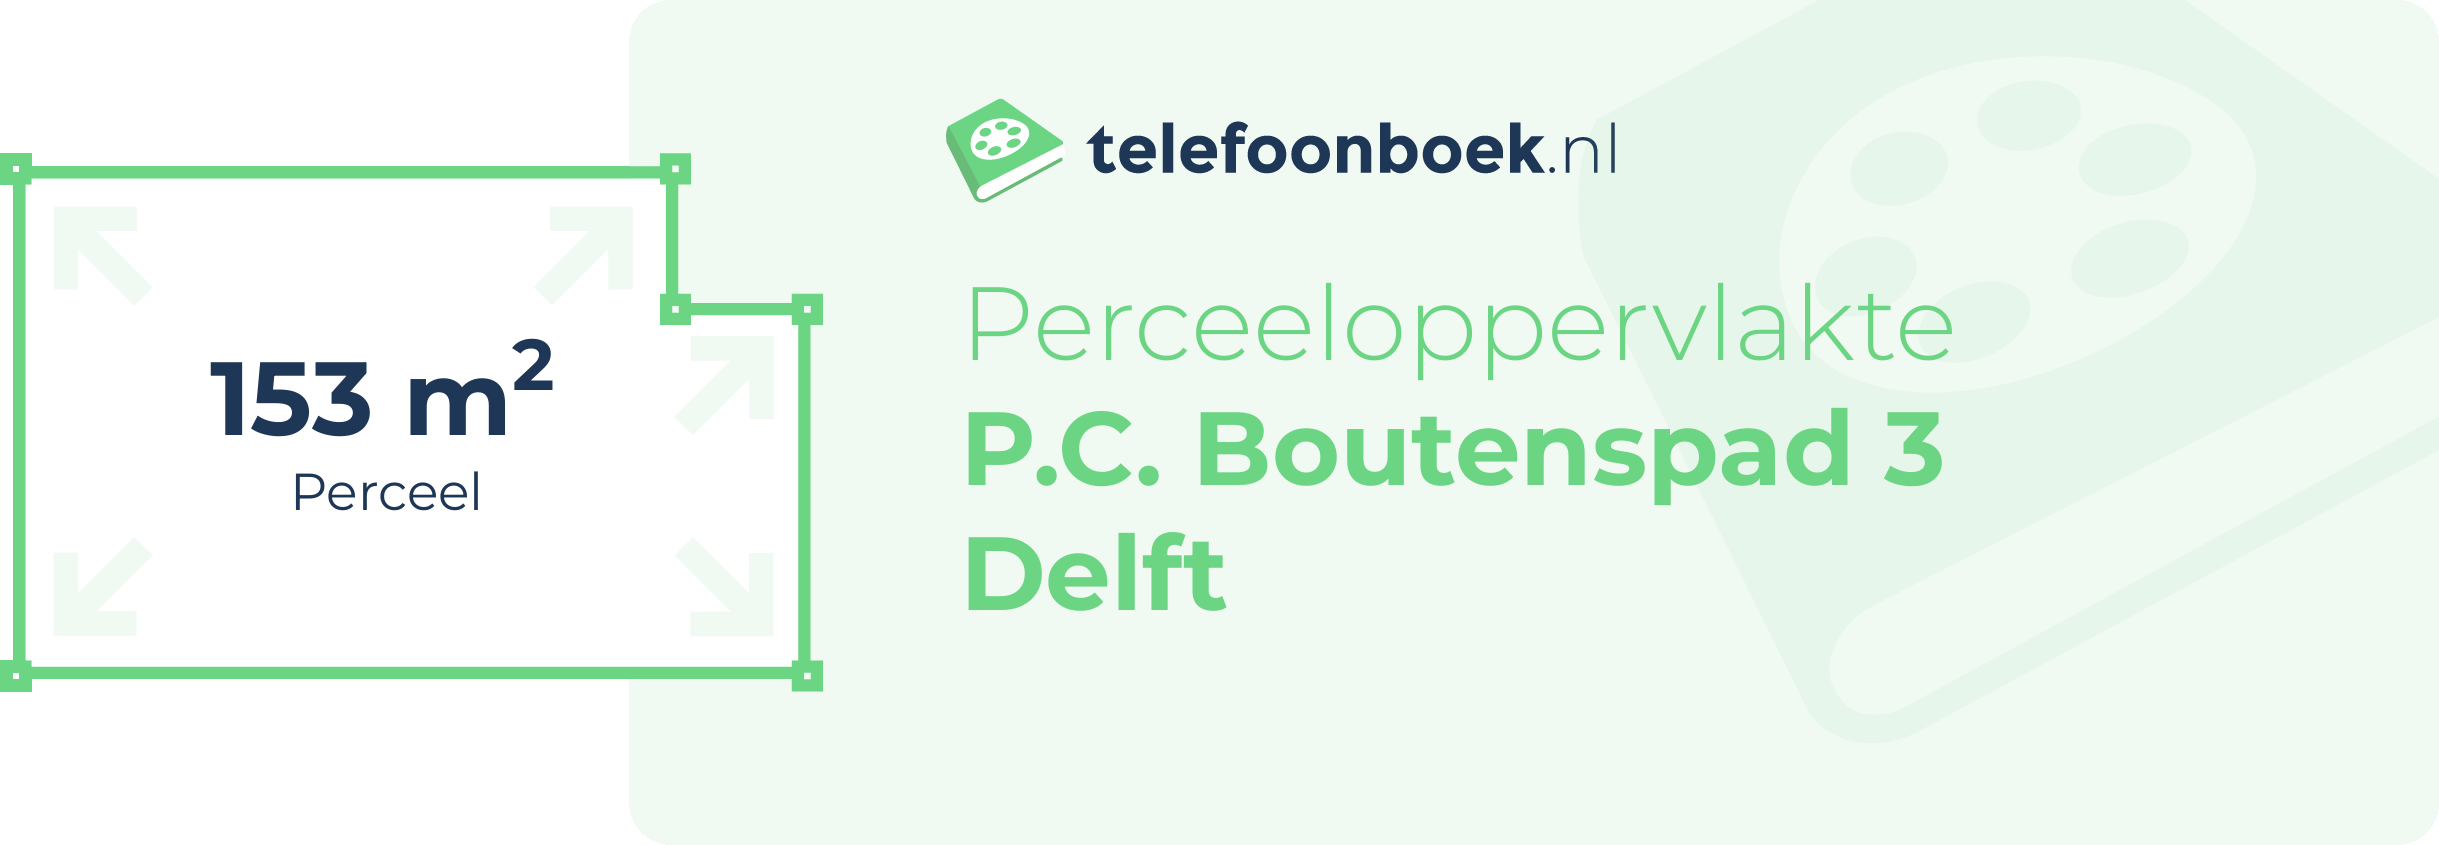 Perceeloppervlakte P.C. Boutenspad 3 Delft